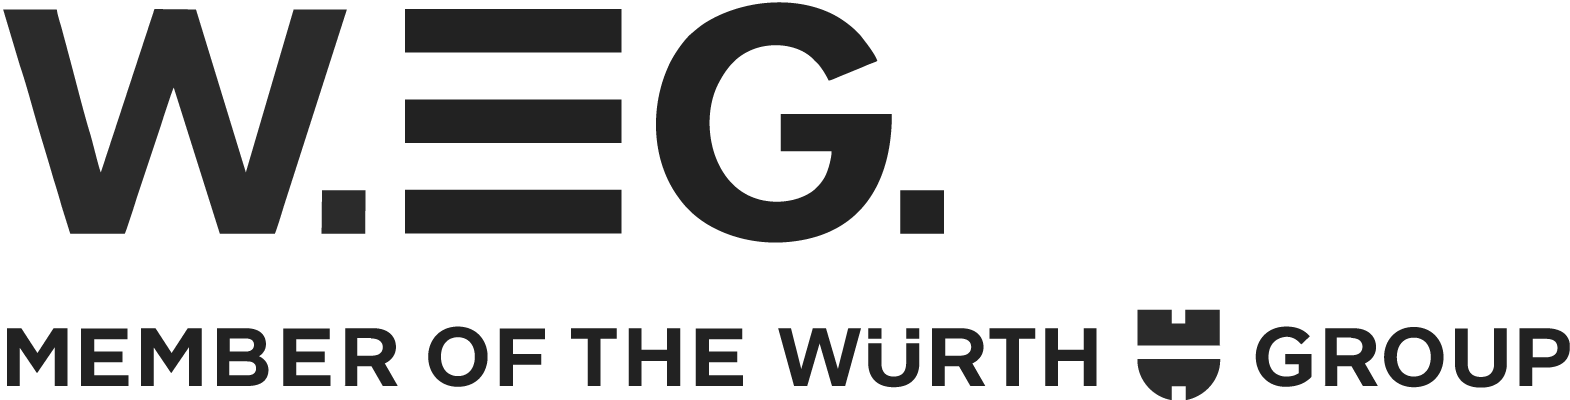 weg-logo-ConvertImage